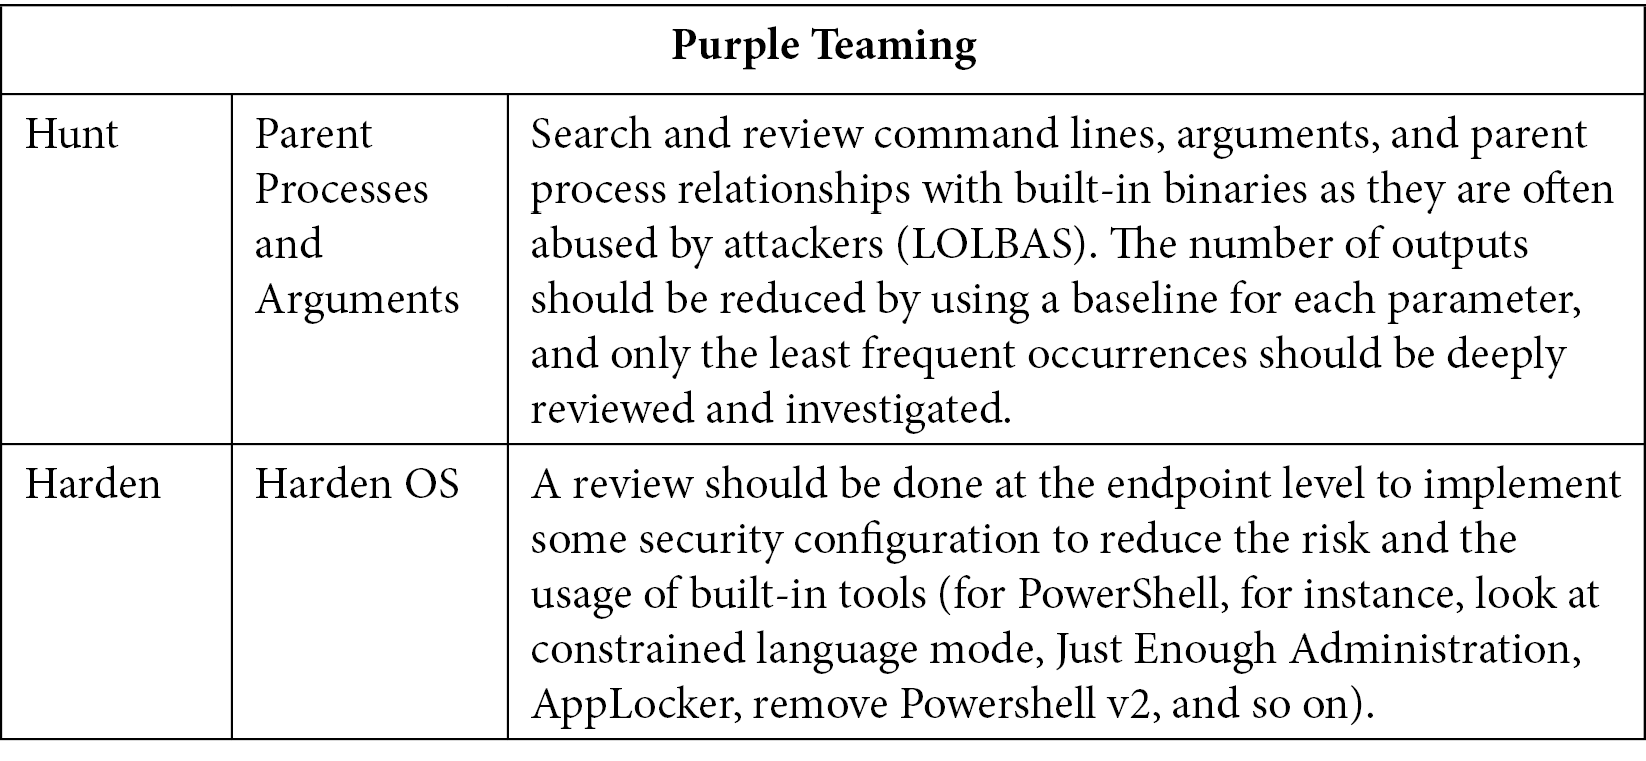 Table 10.4 – Purple Teaming T1059
